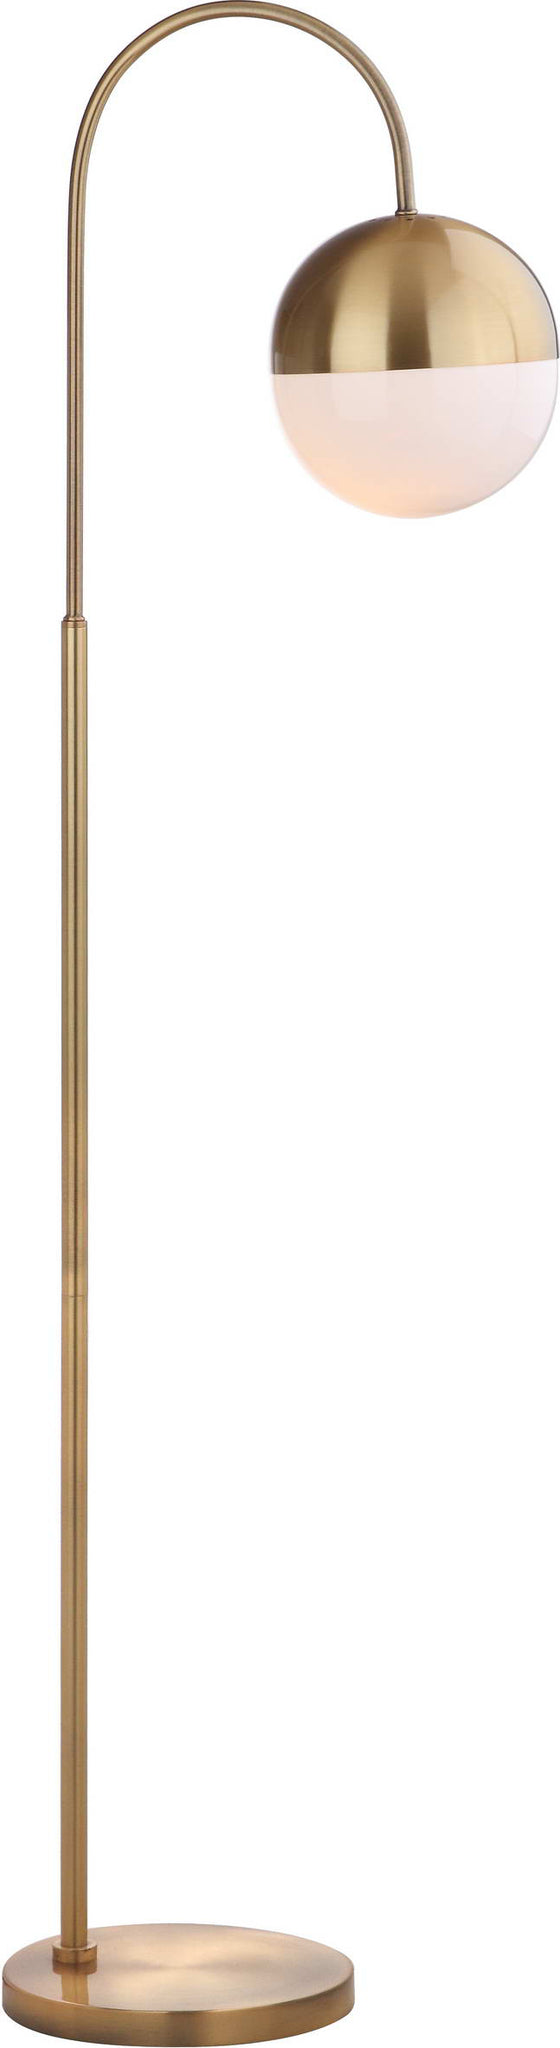 Safavieh Jonas 555-Inch H Floor Lamp Brass Gold Mirror main image